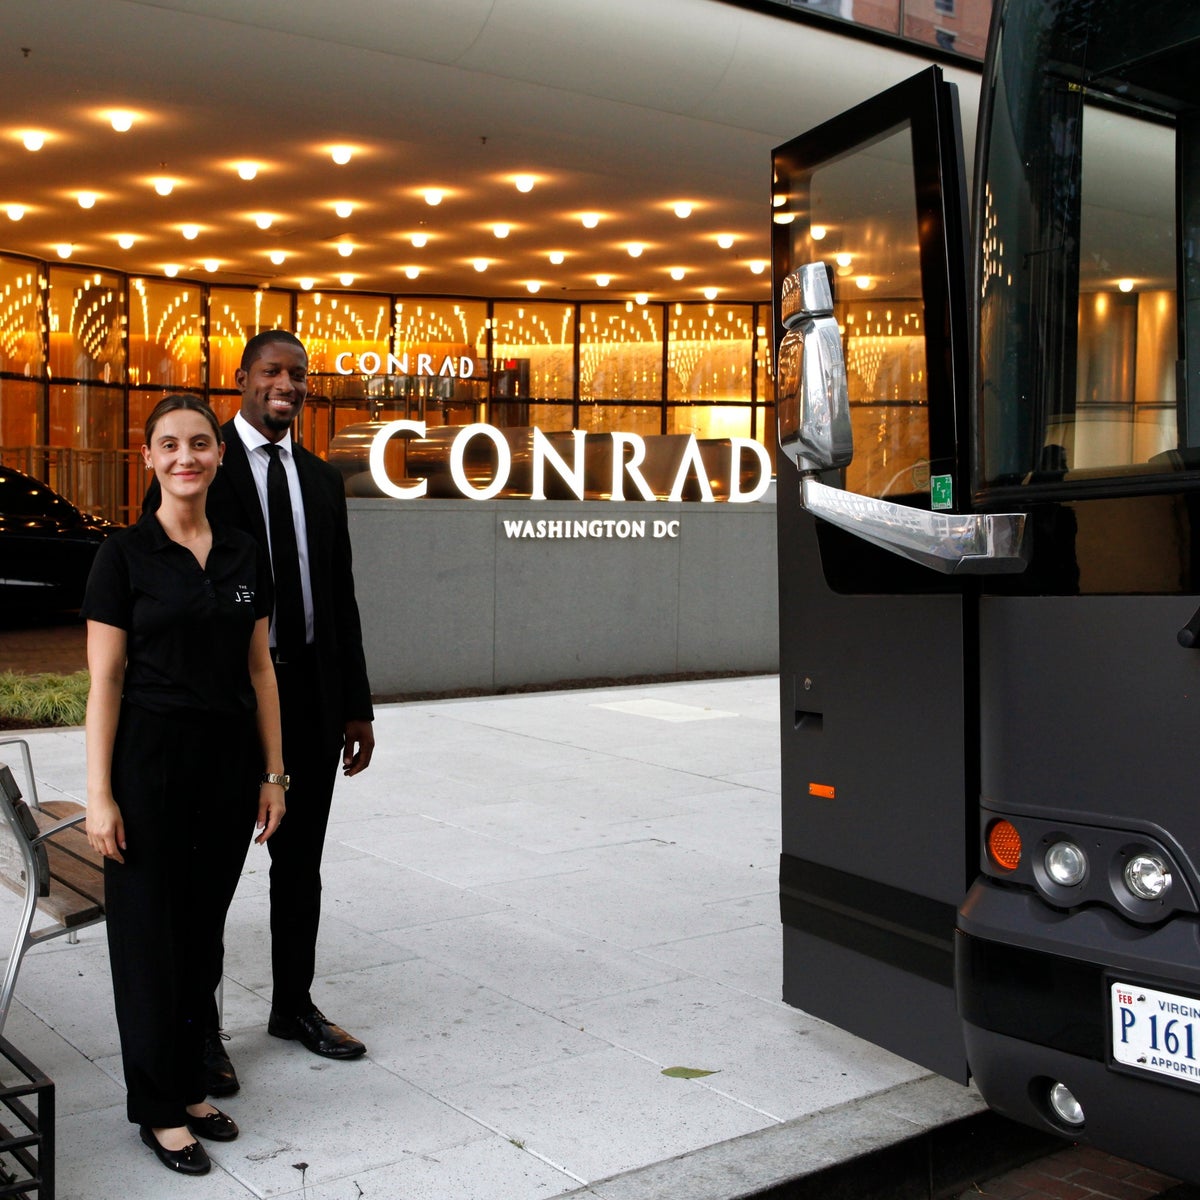 The Jet bus at Conrad Washington, DC